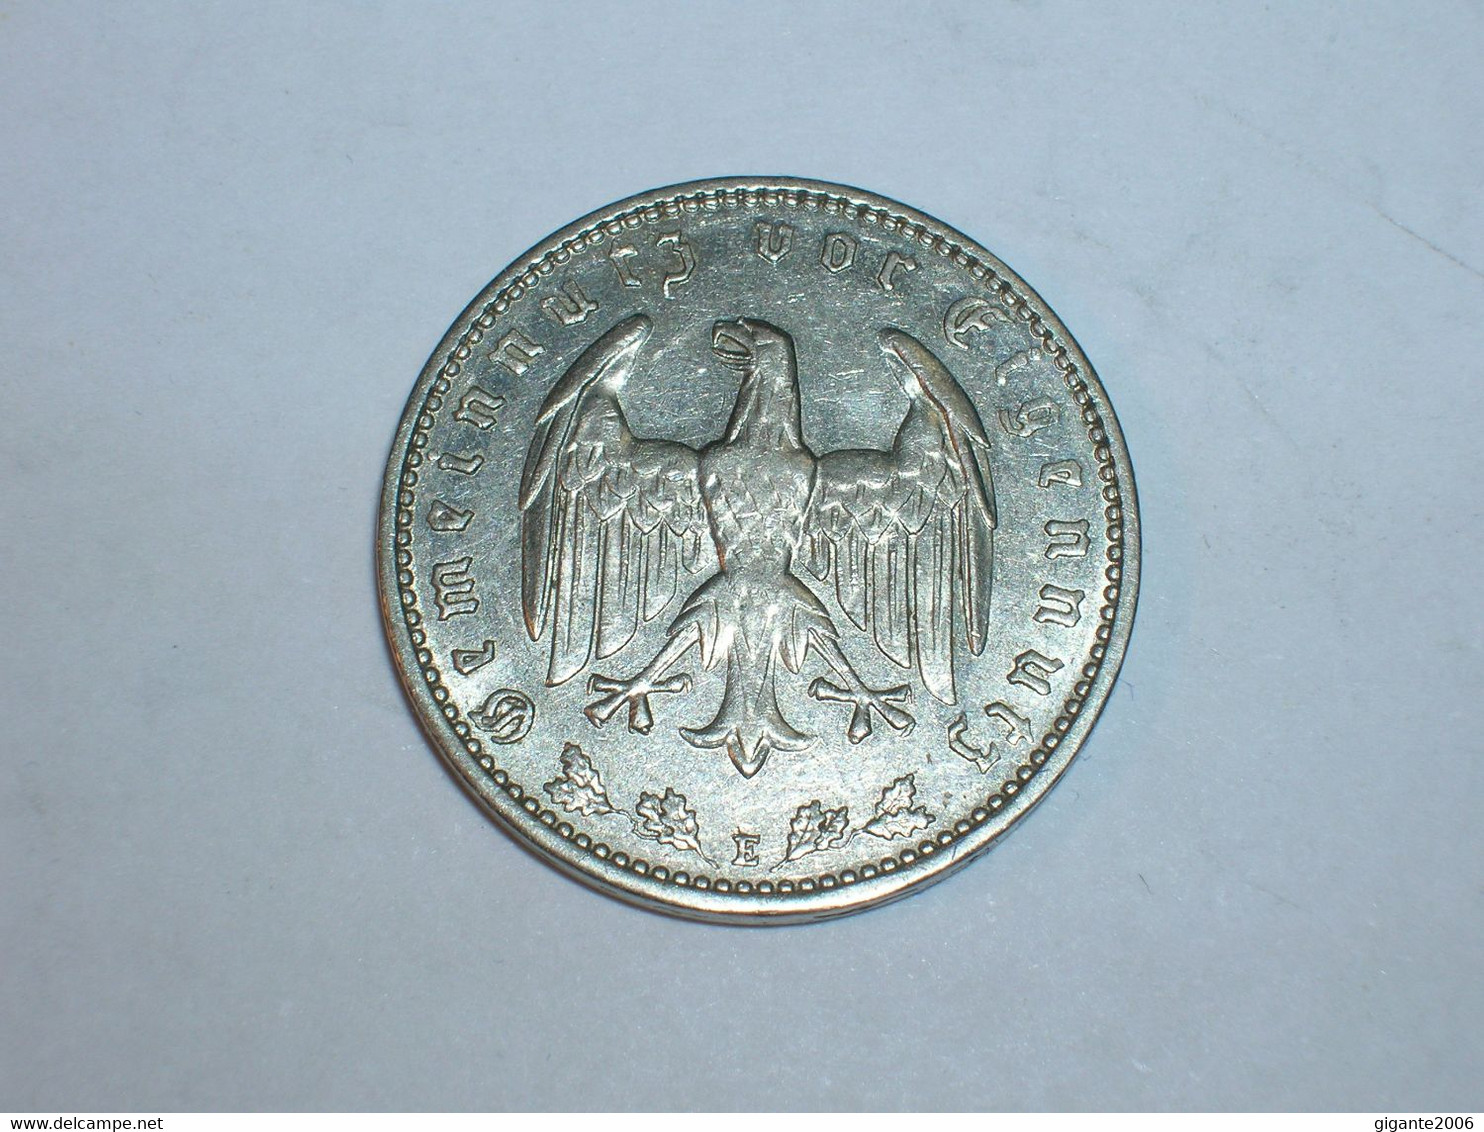 ALEMANIA. 1 Marco 1933 A (5372) - 1 Reichsmark